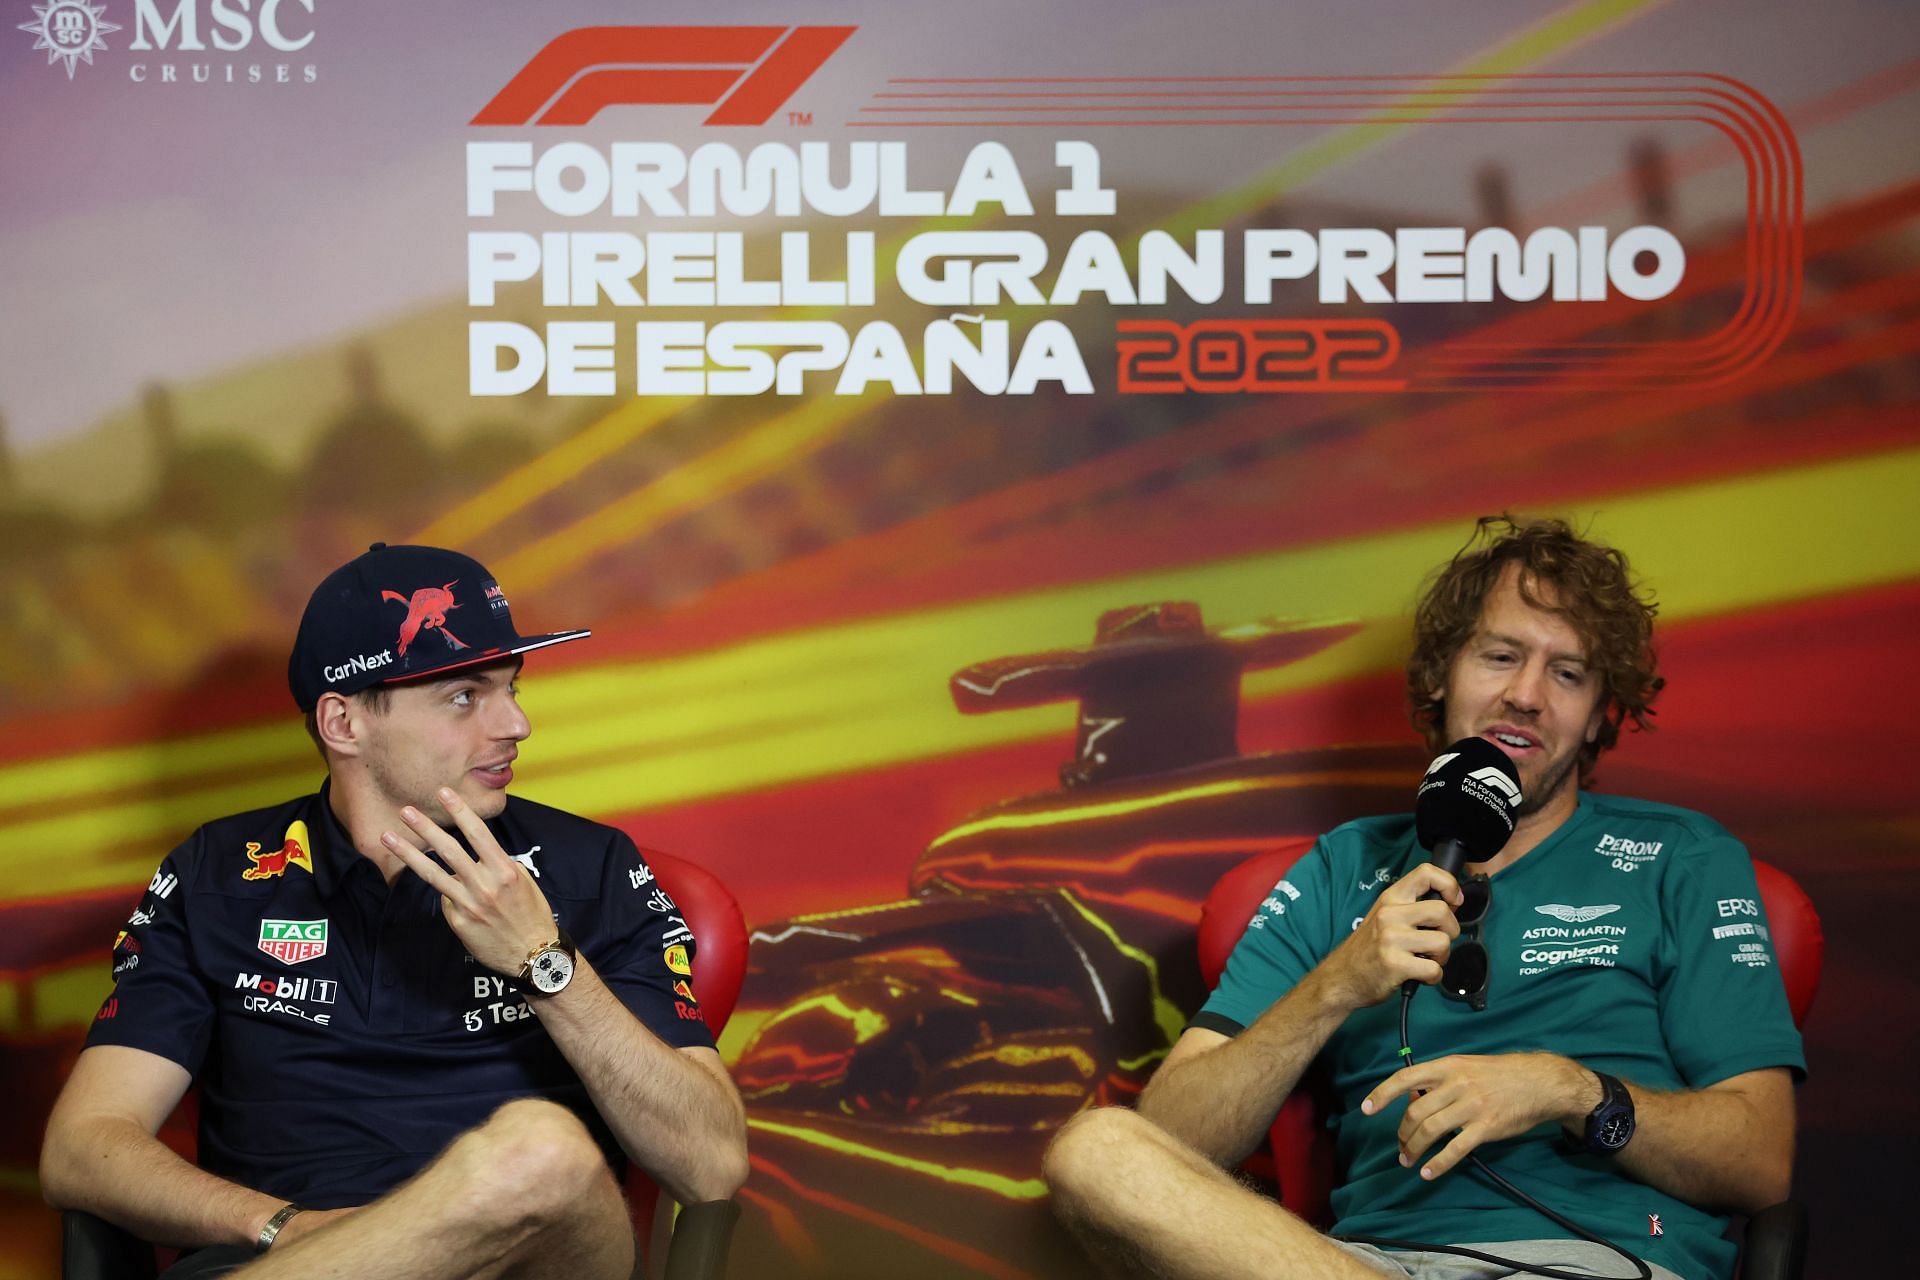 F1 Grand Prix of Spain - Practice